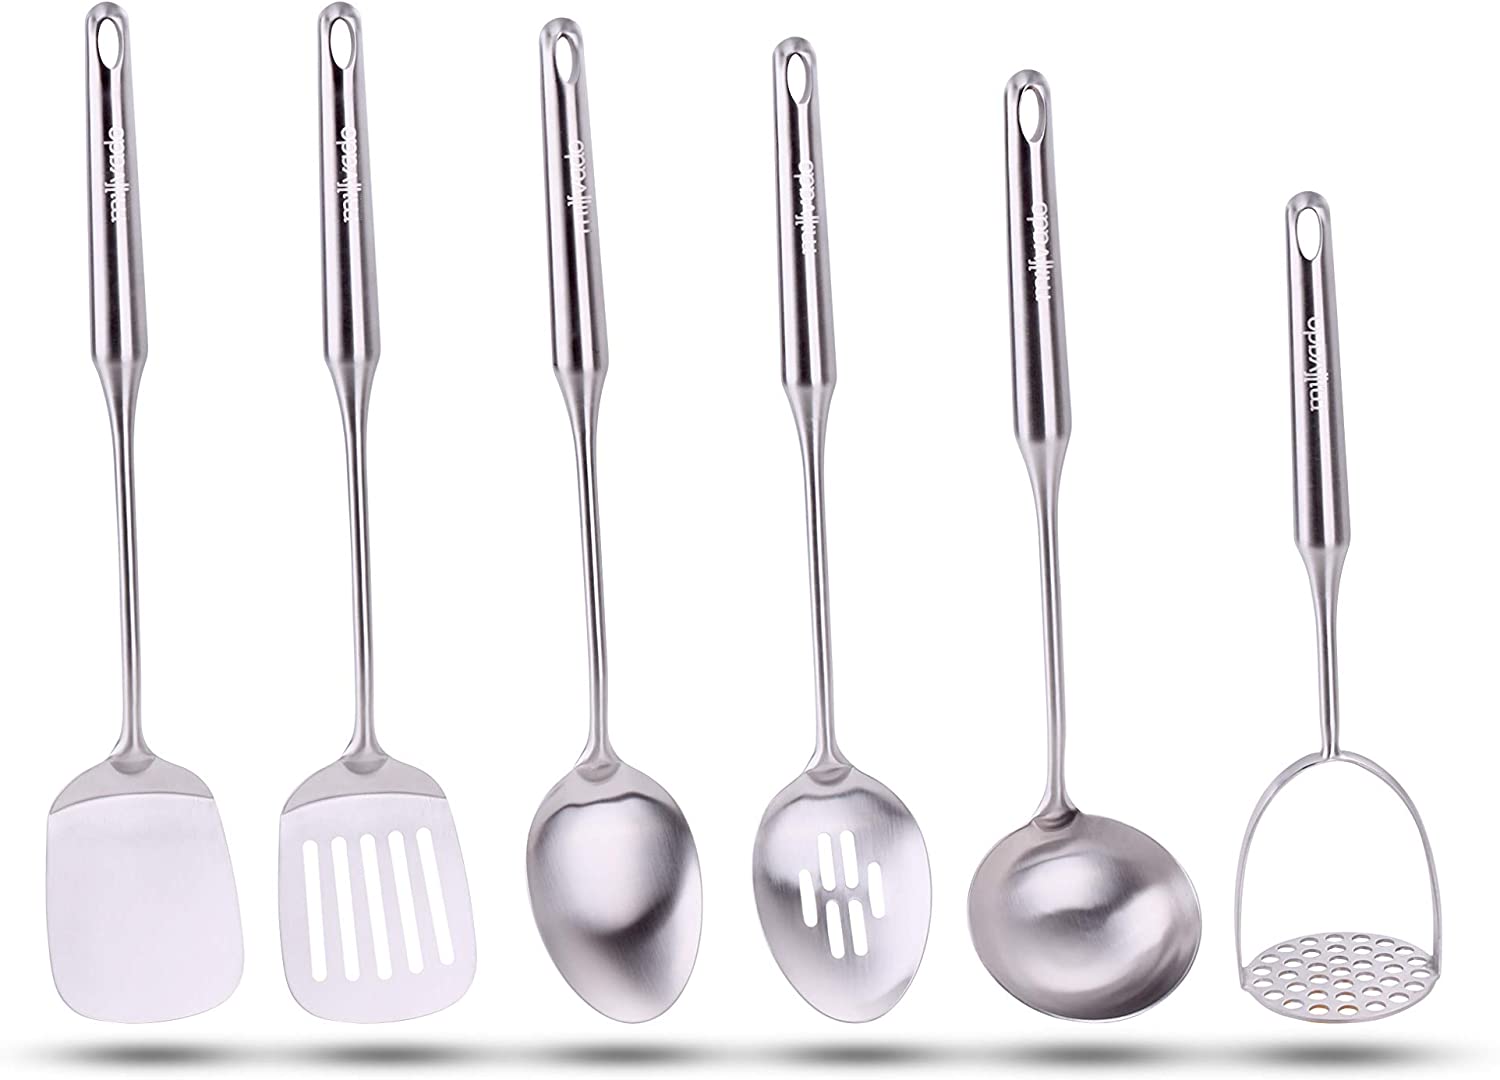 Milvado stainless steel 6 piece utensils set